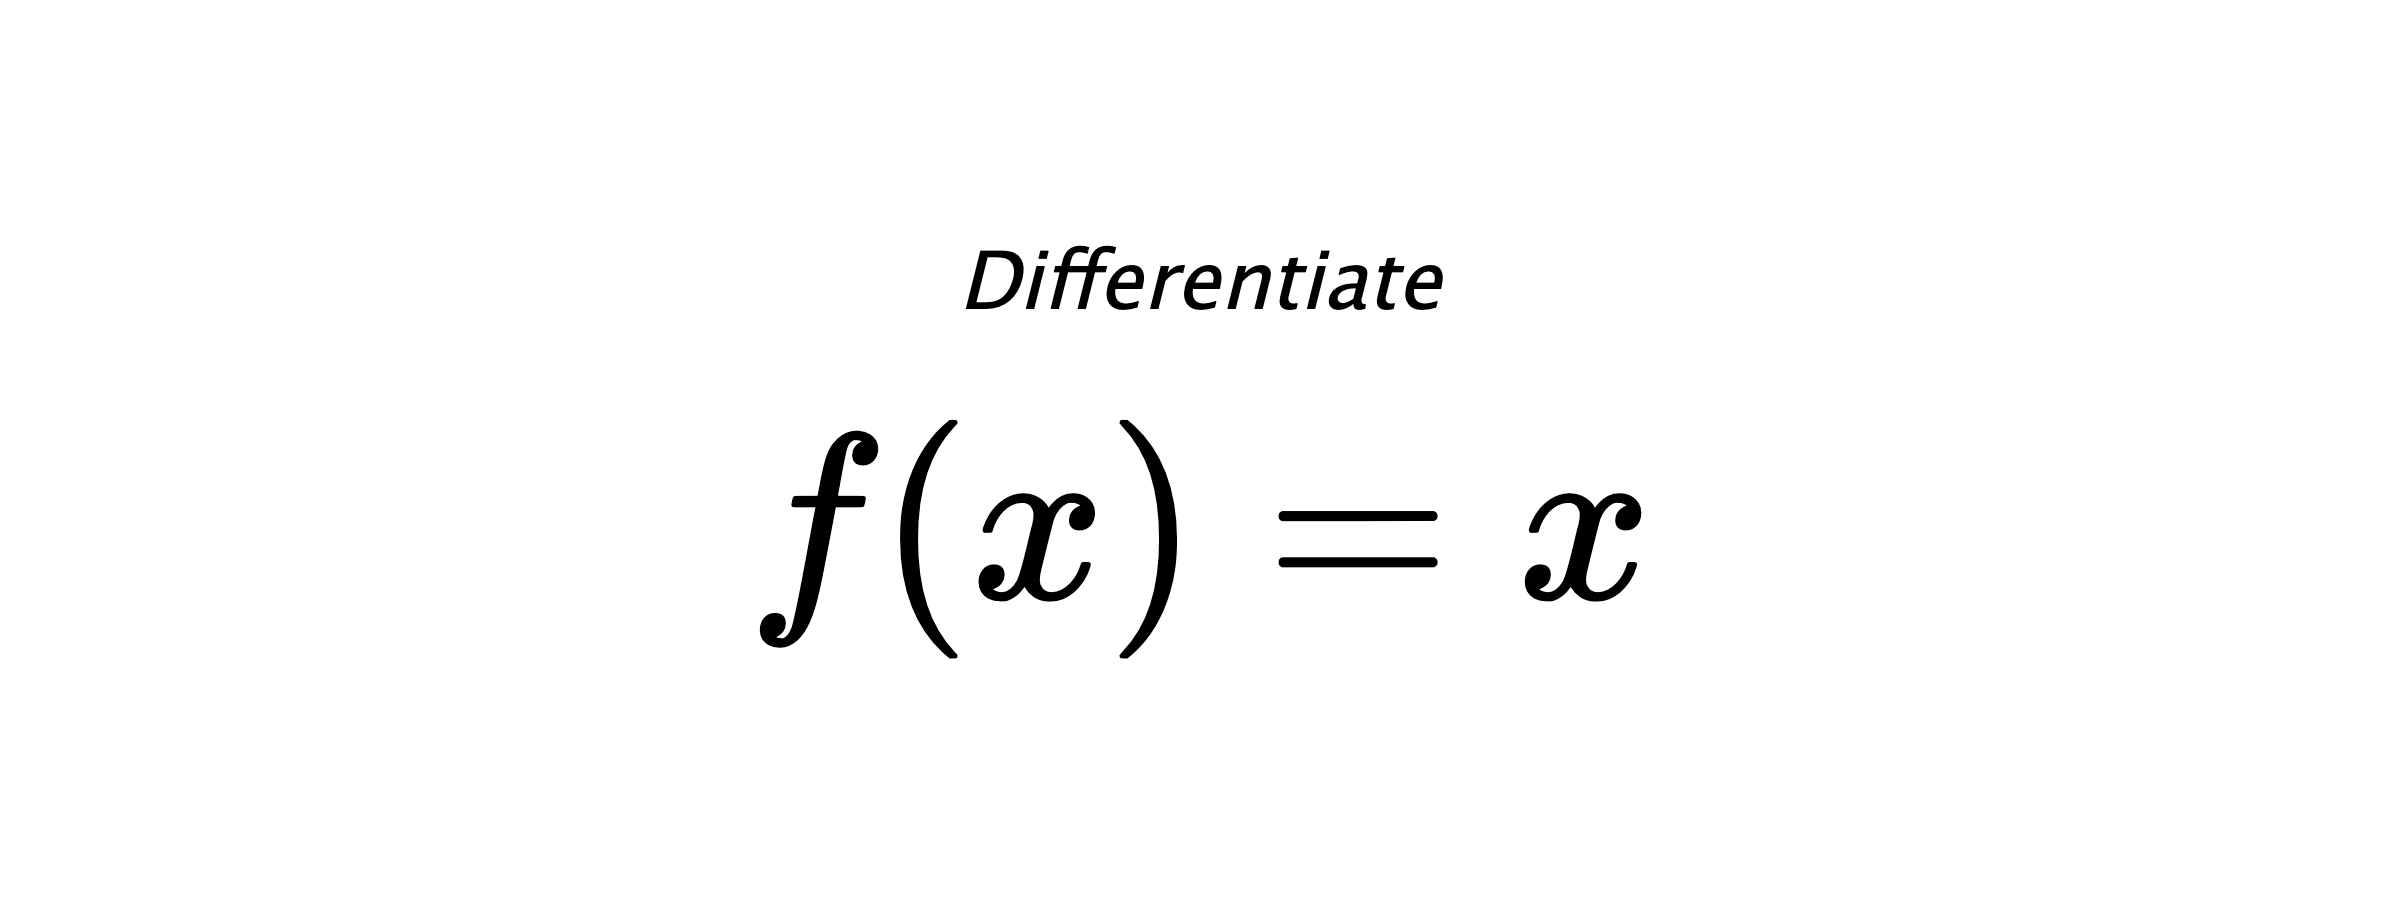 Differentiate $ f(x) = x $